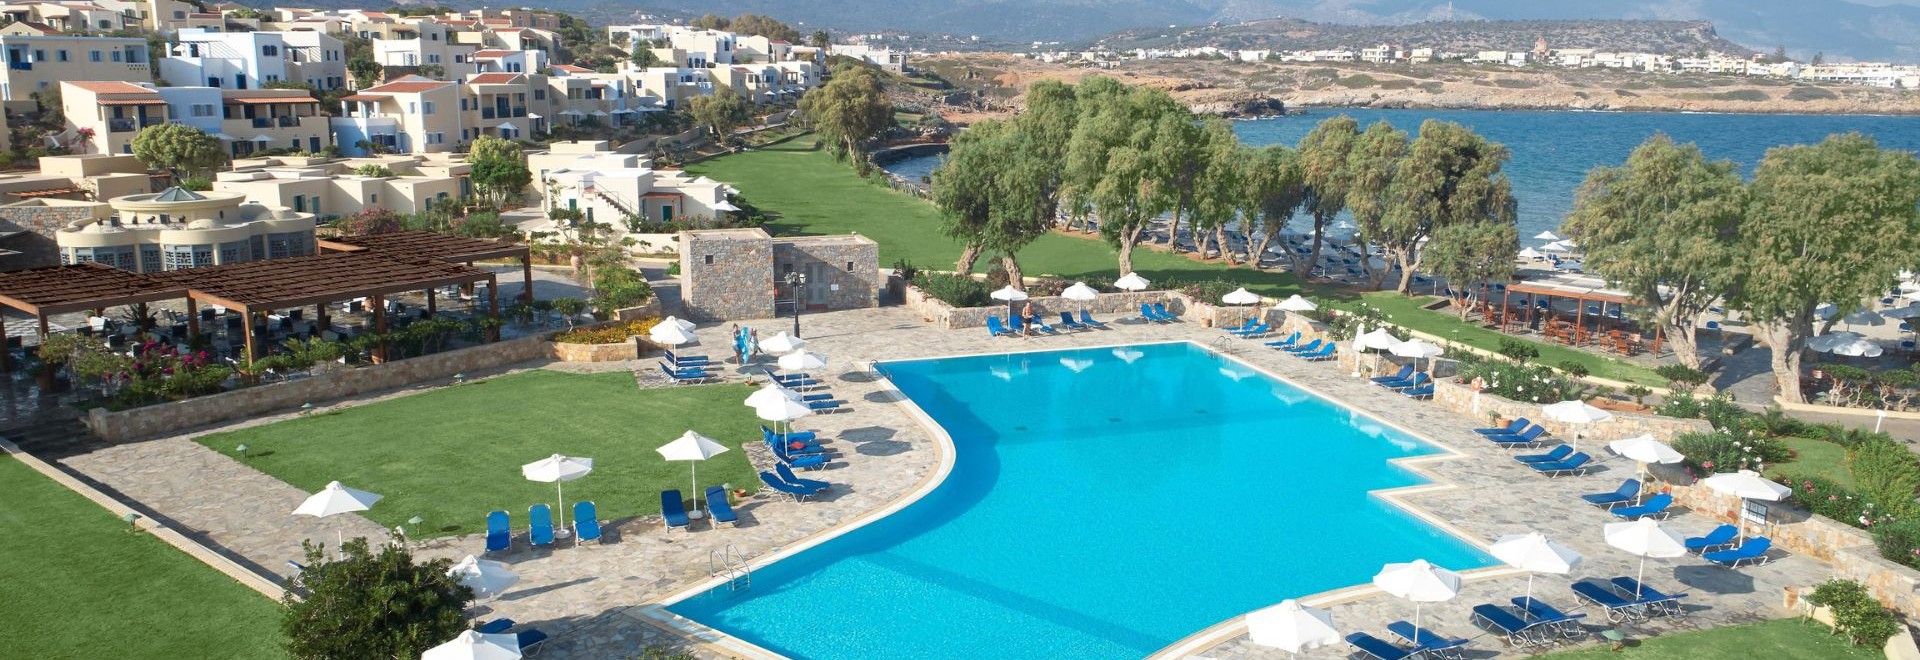 Kalimera Kriti Hotel & Village Resort, Greece - Book. Travel. Play.